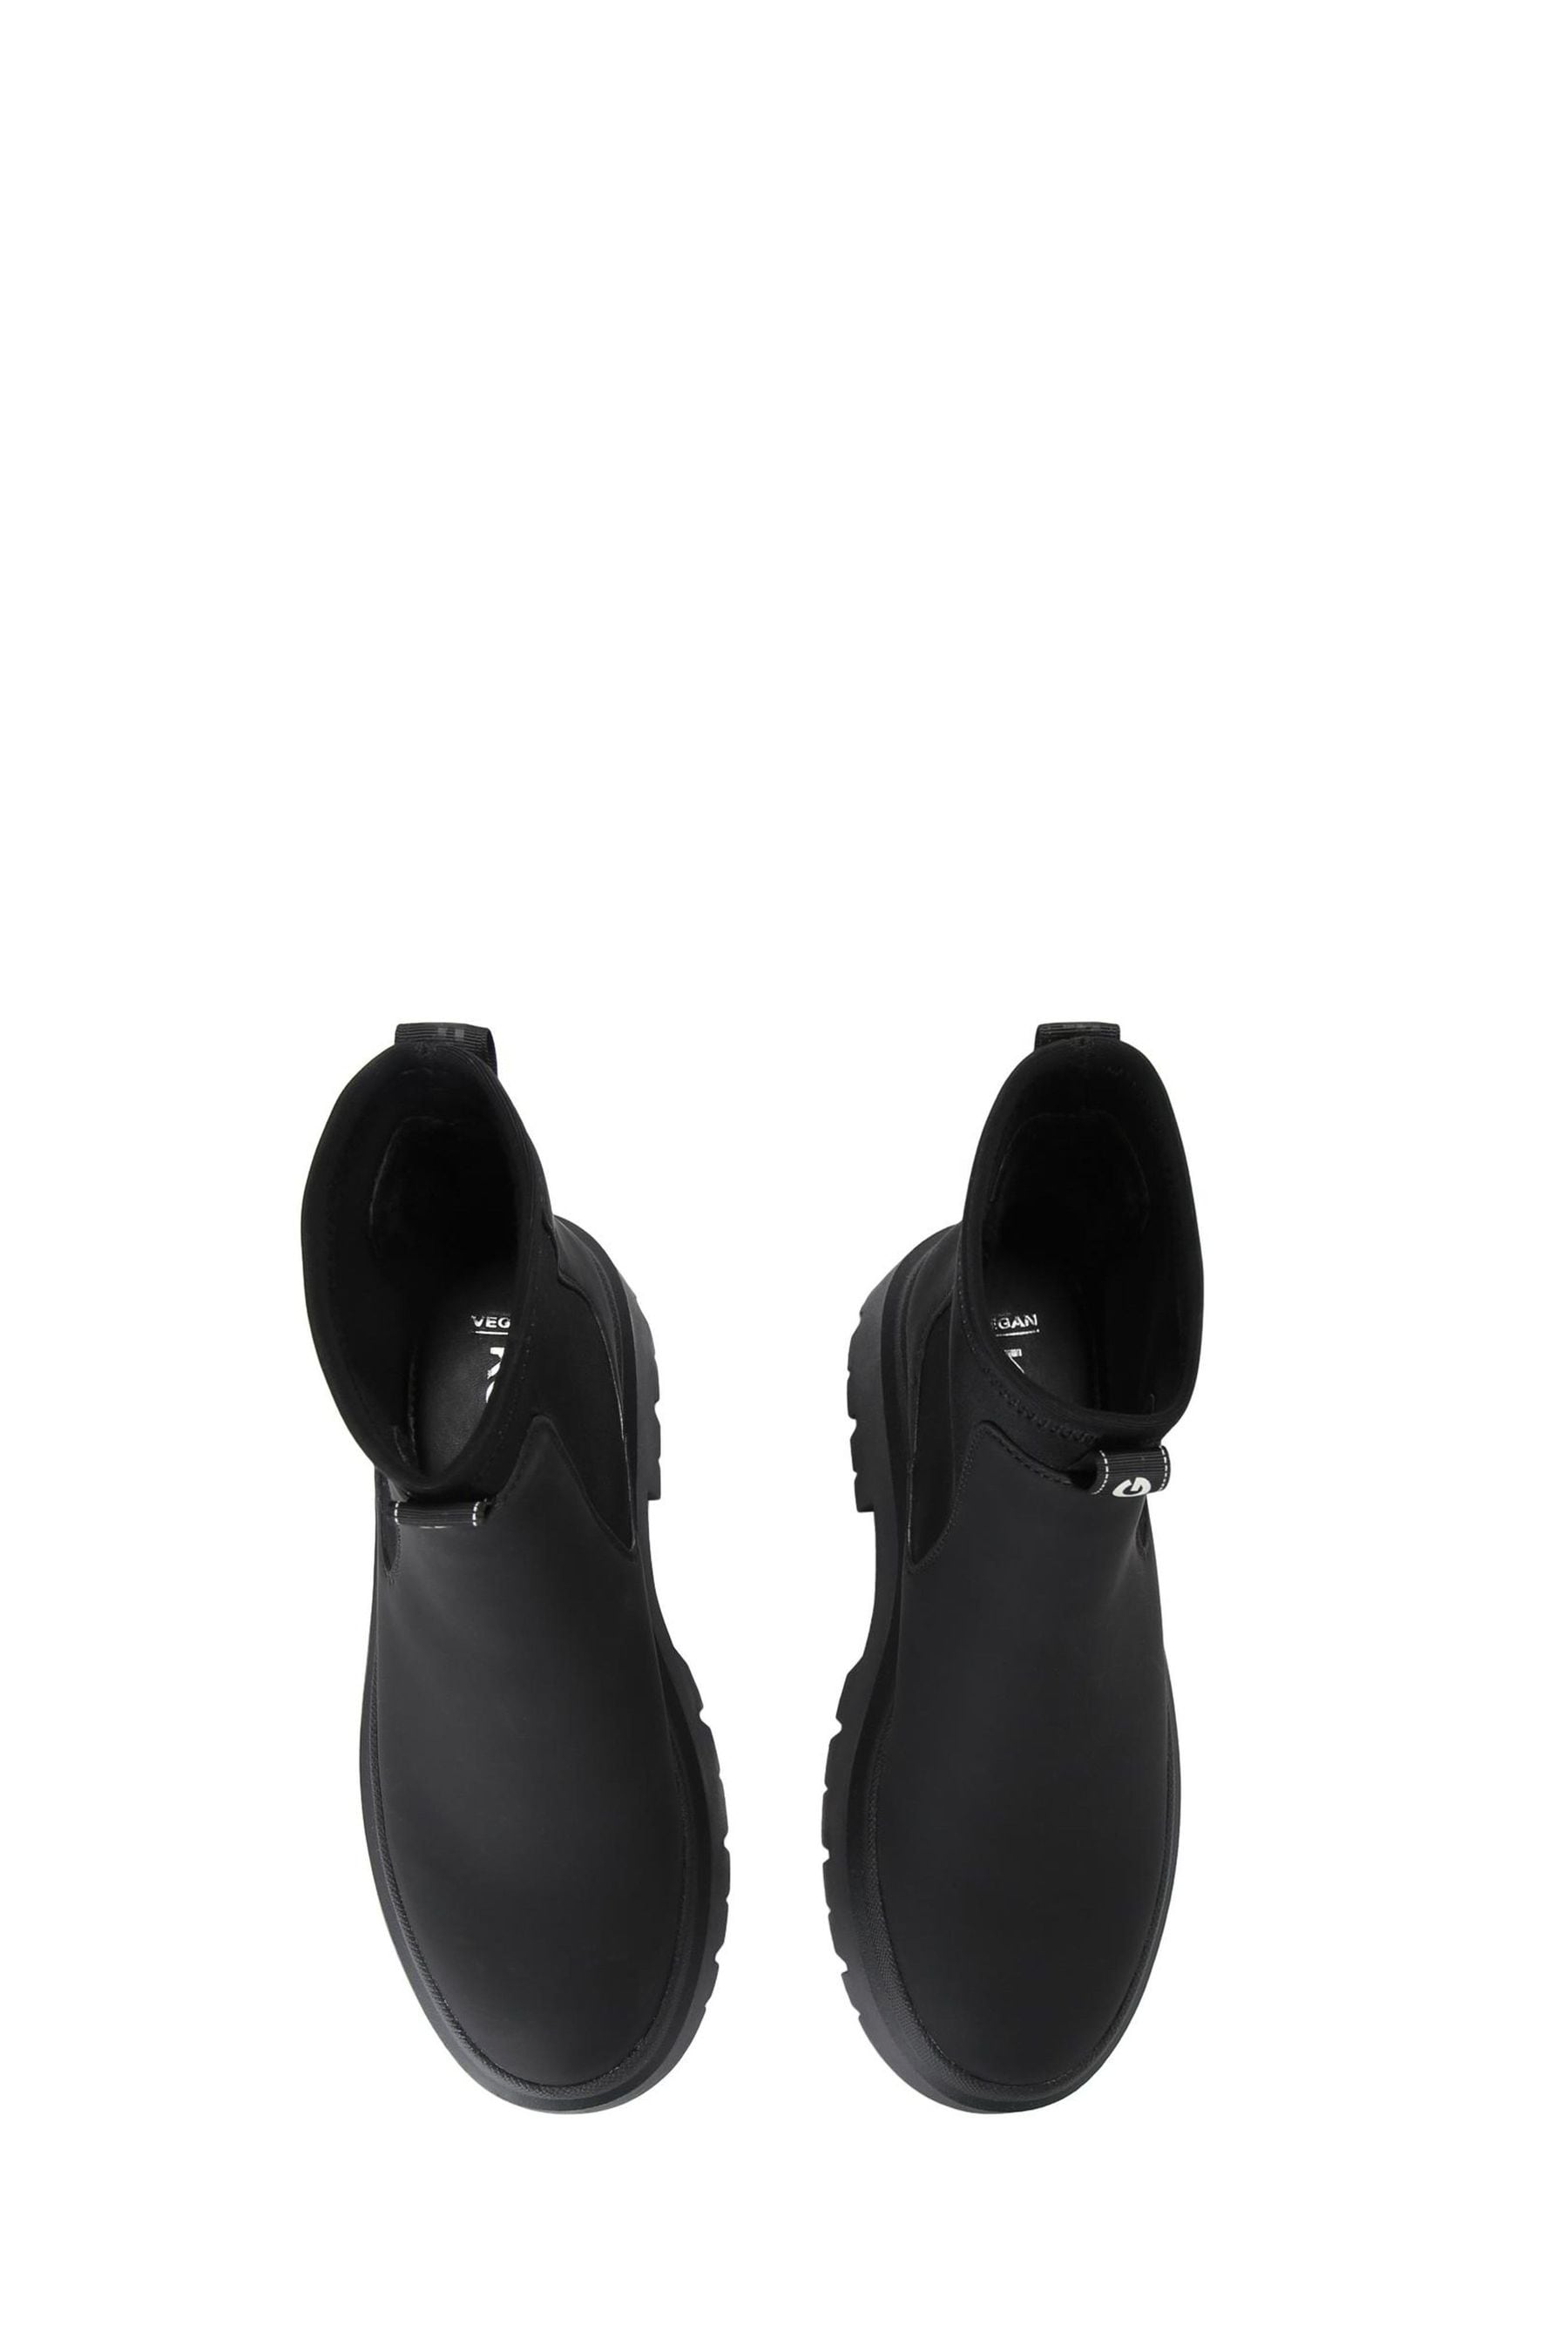 Buy KG Kurt Geiger Black Thea Boots from the Next UK online shop